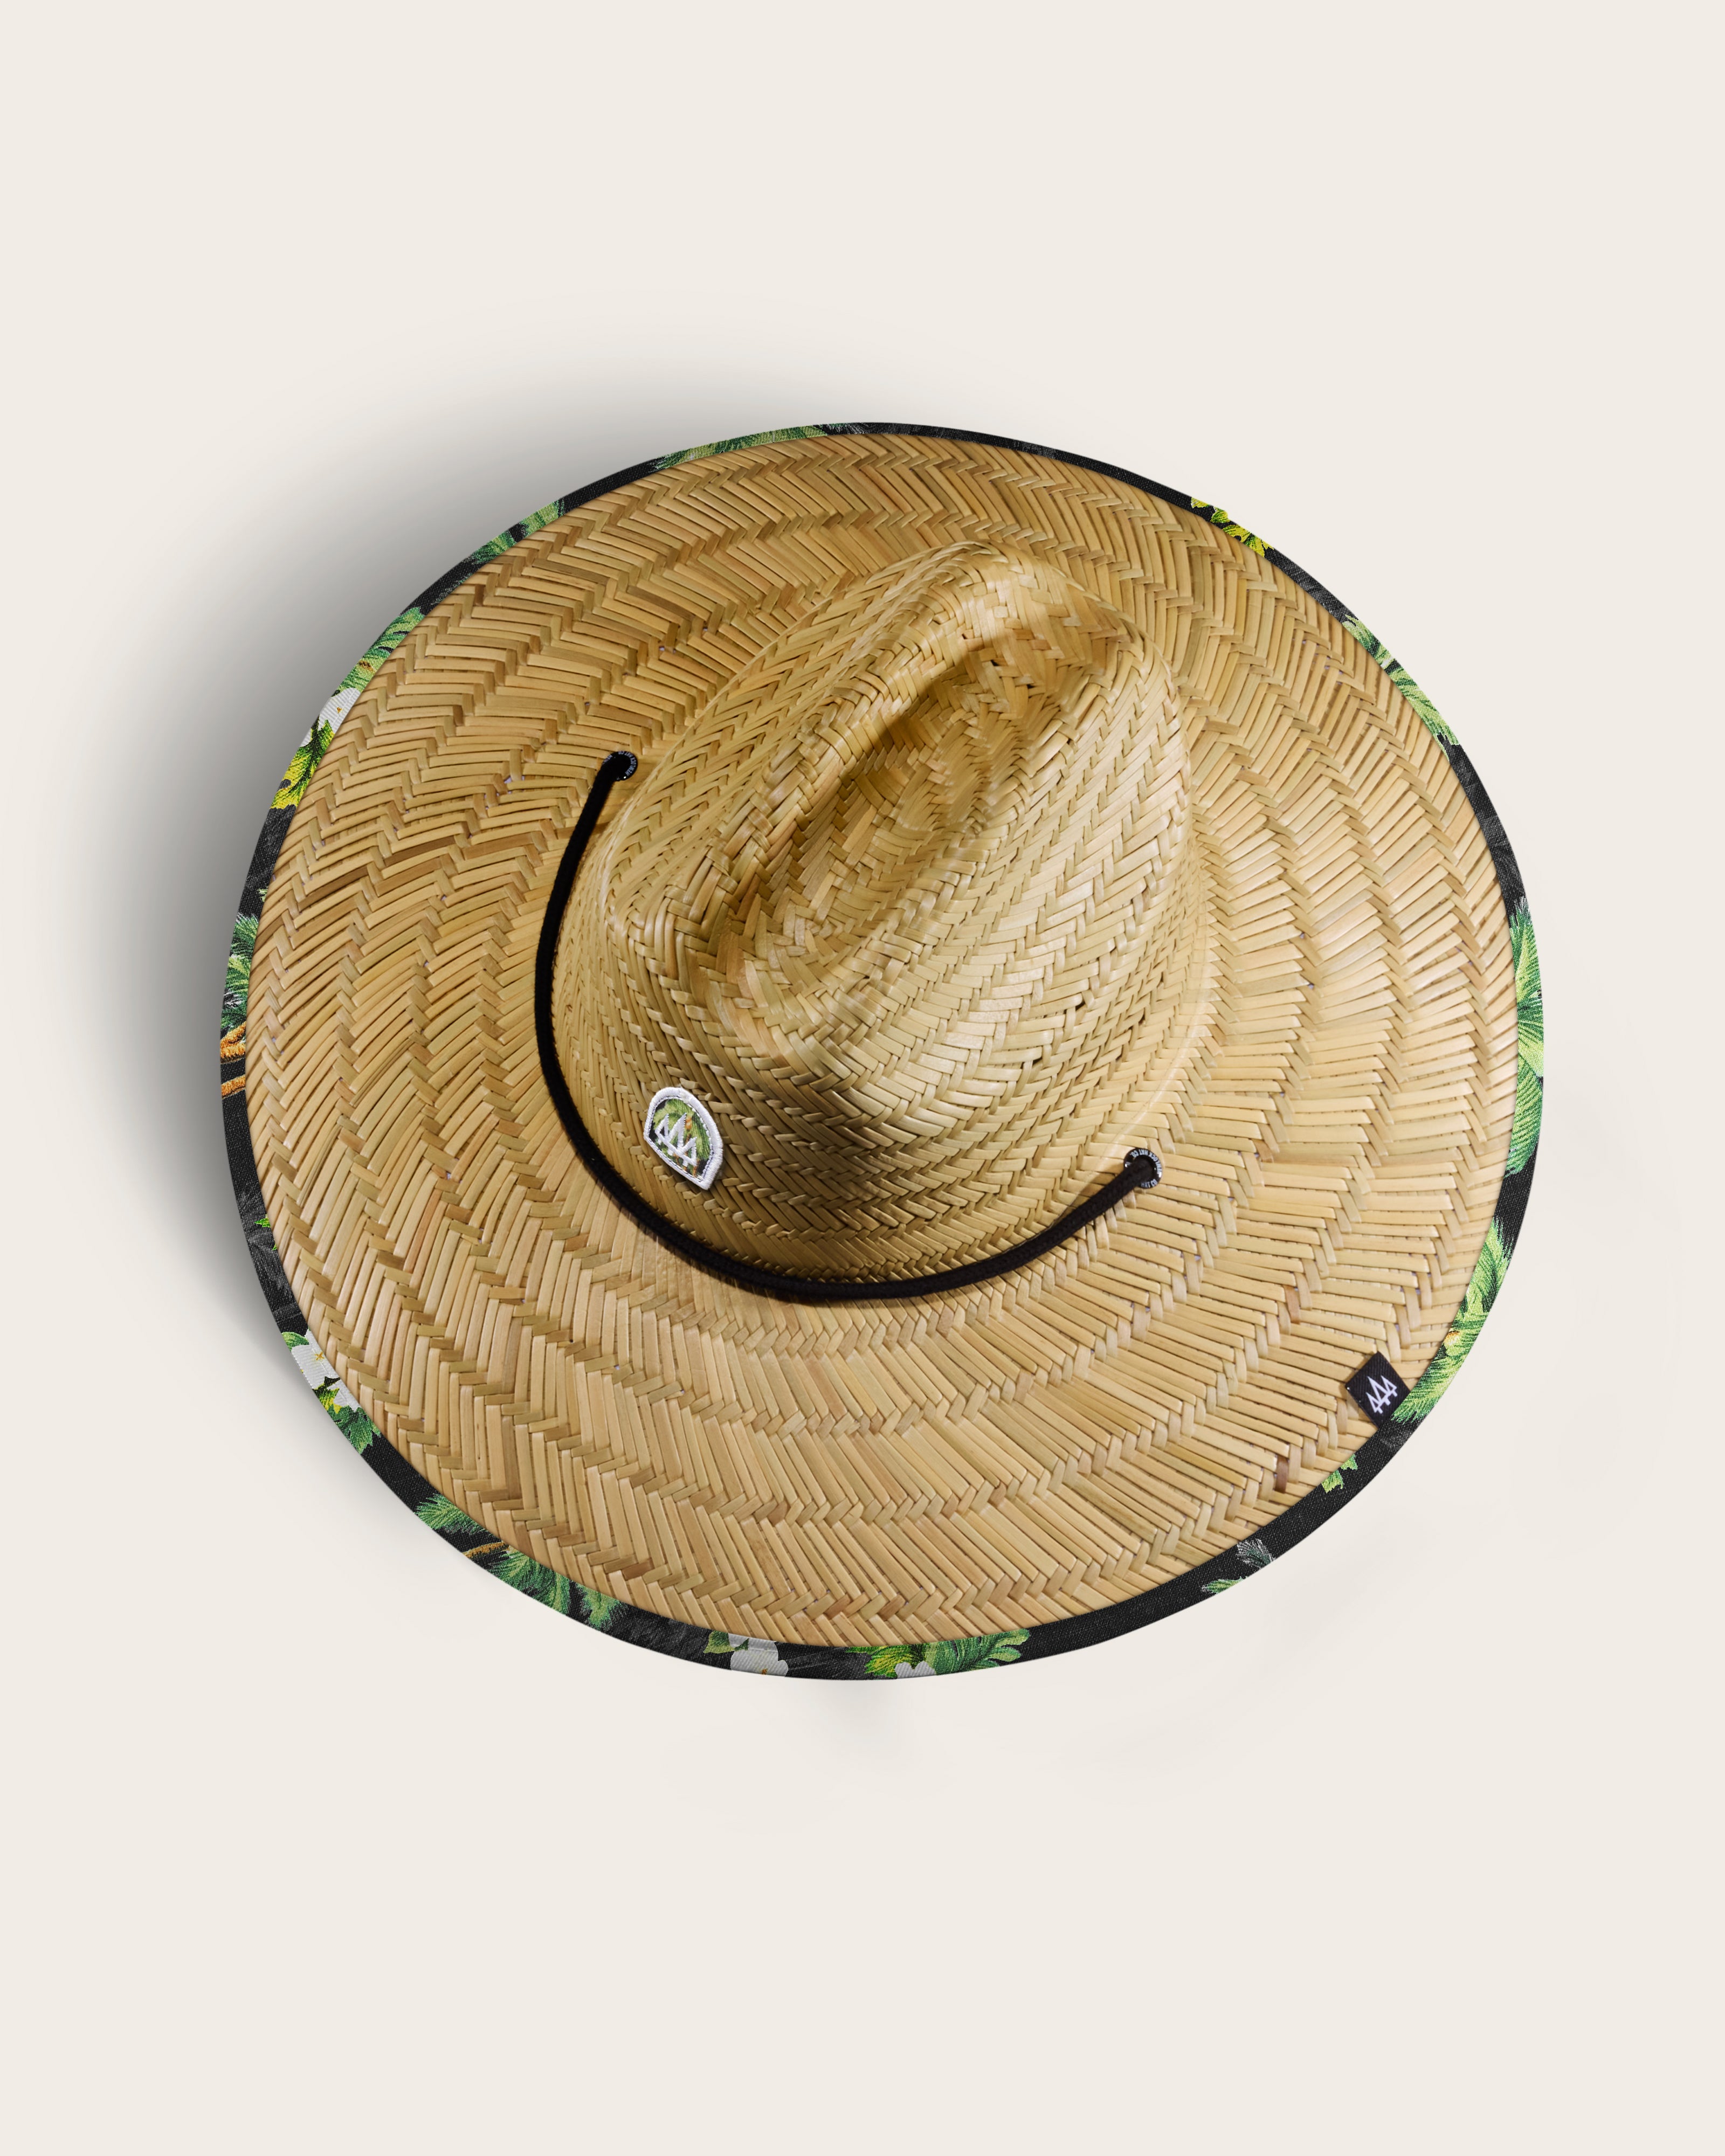 Hemlock Palms straw lifeguard hat with palm tree pattern top of hat